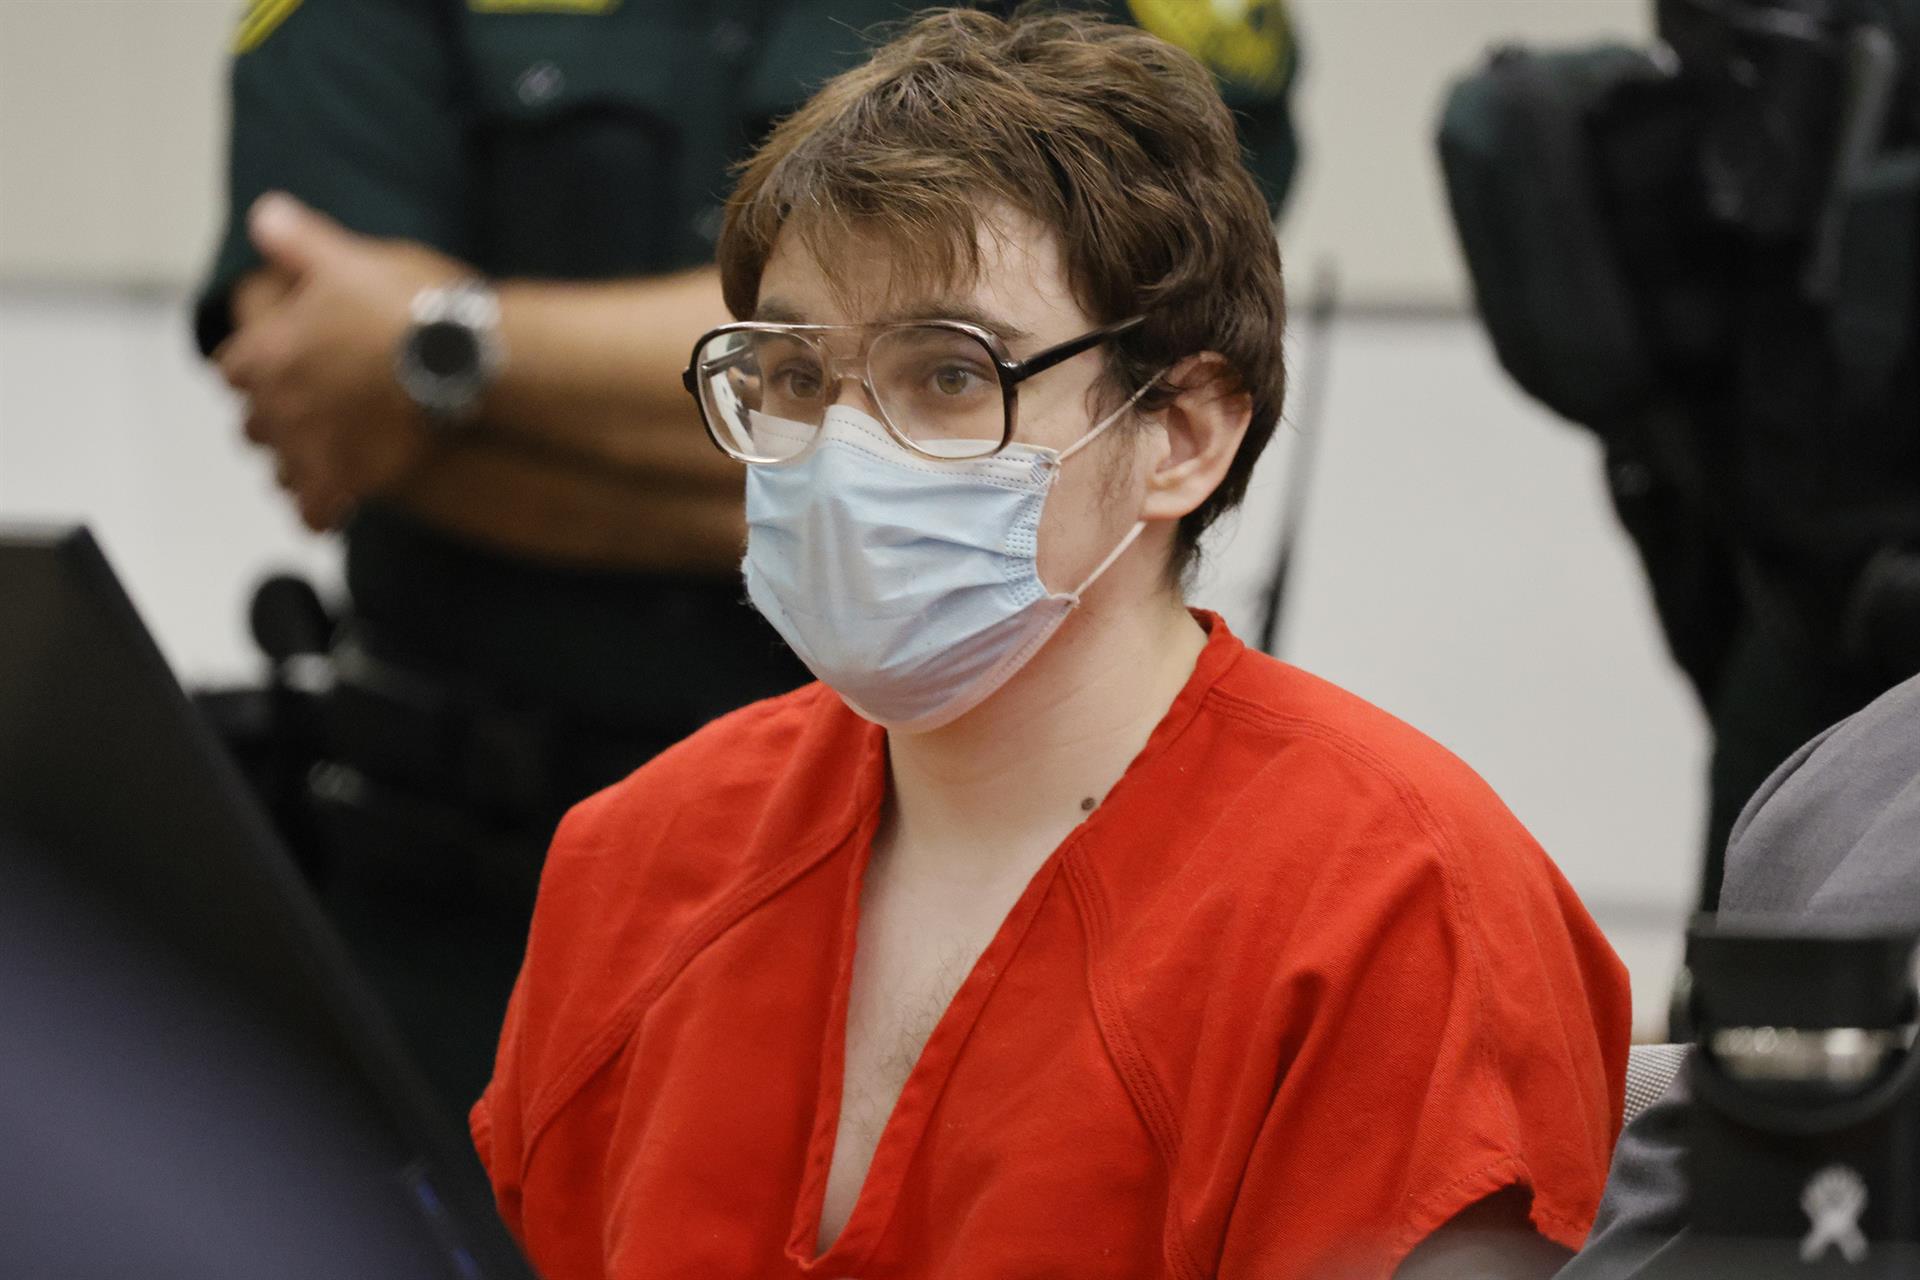 Condenan a cadena perpetua al autor de la matanza de Parkland